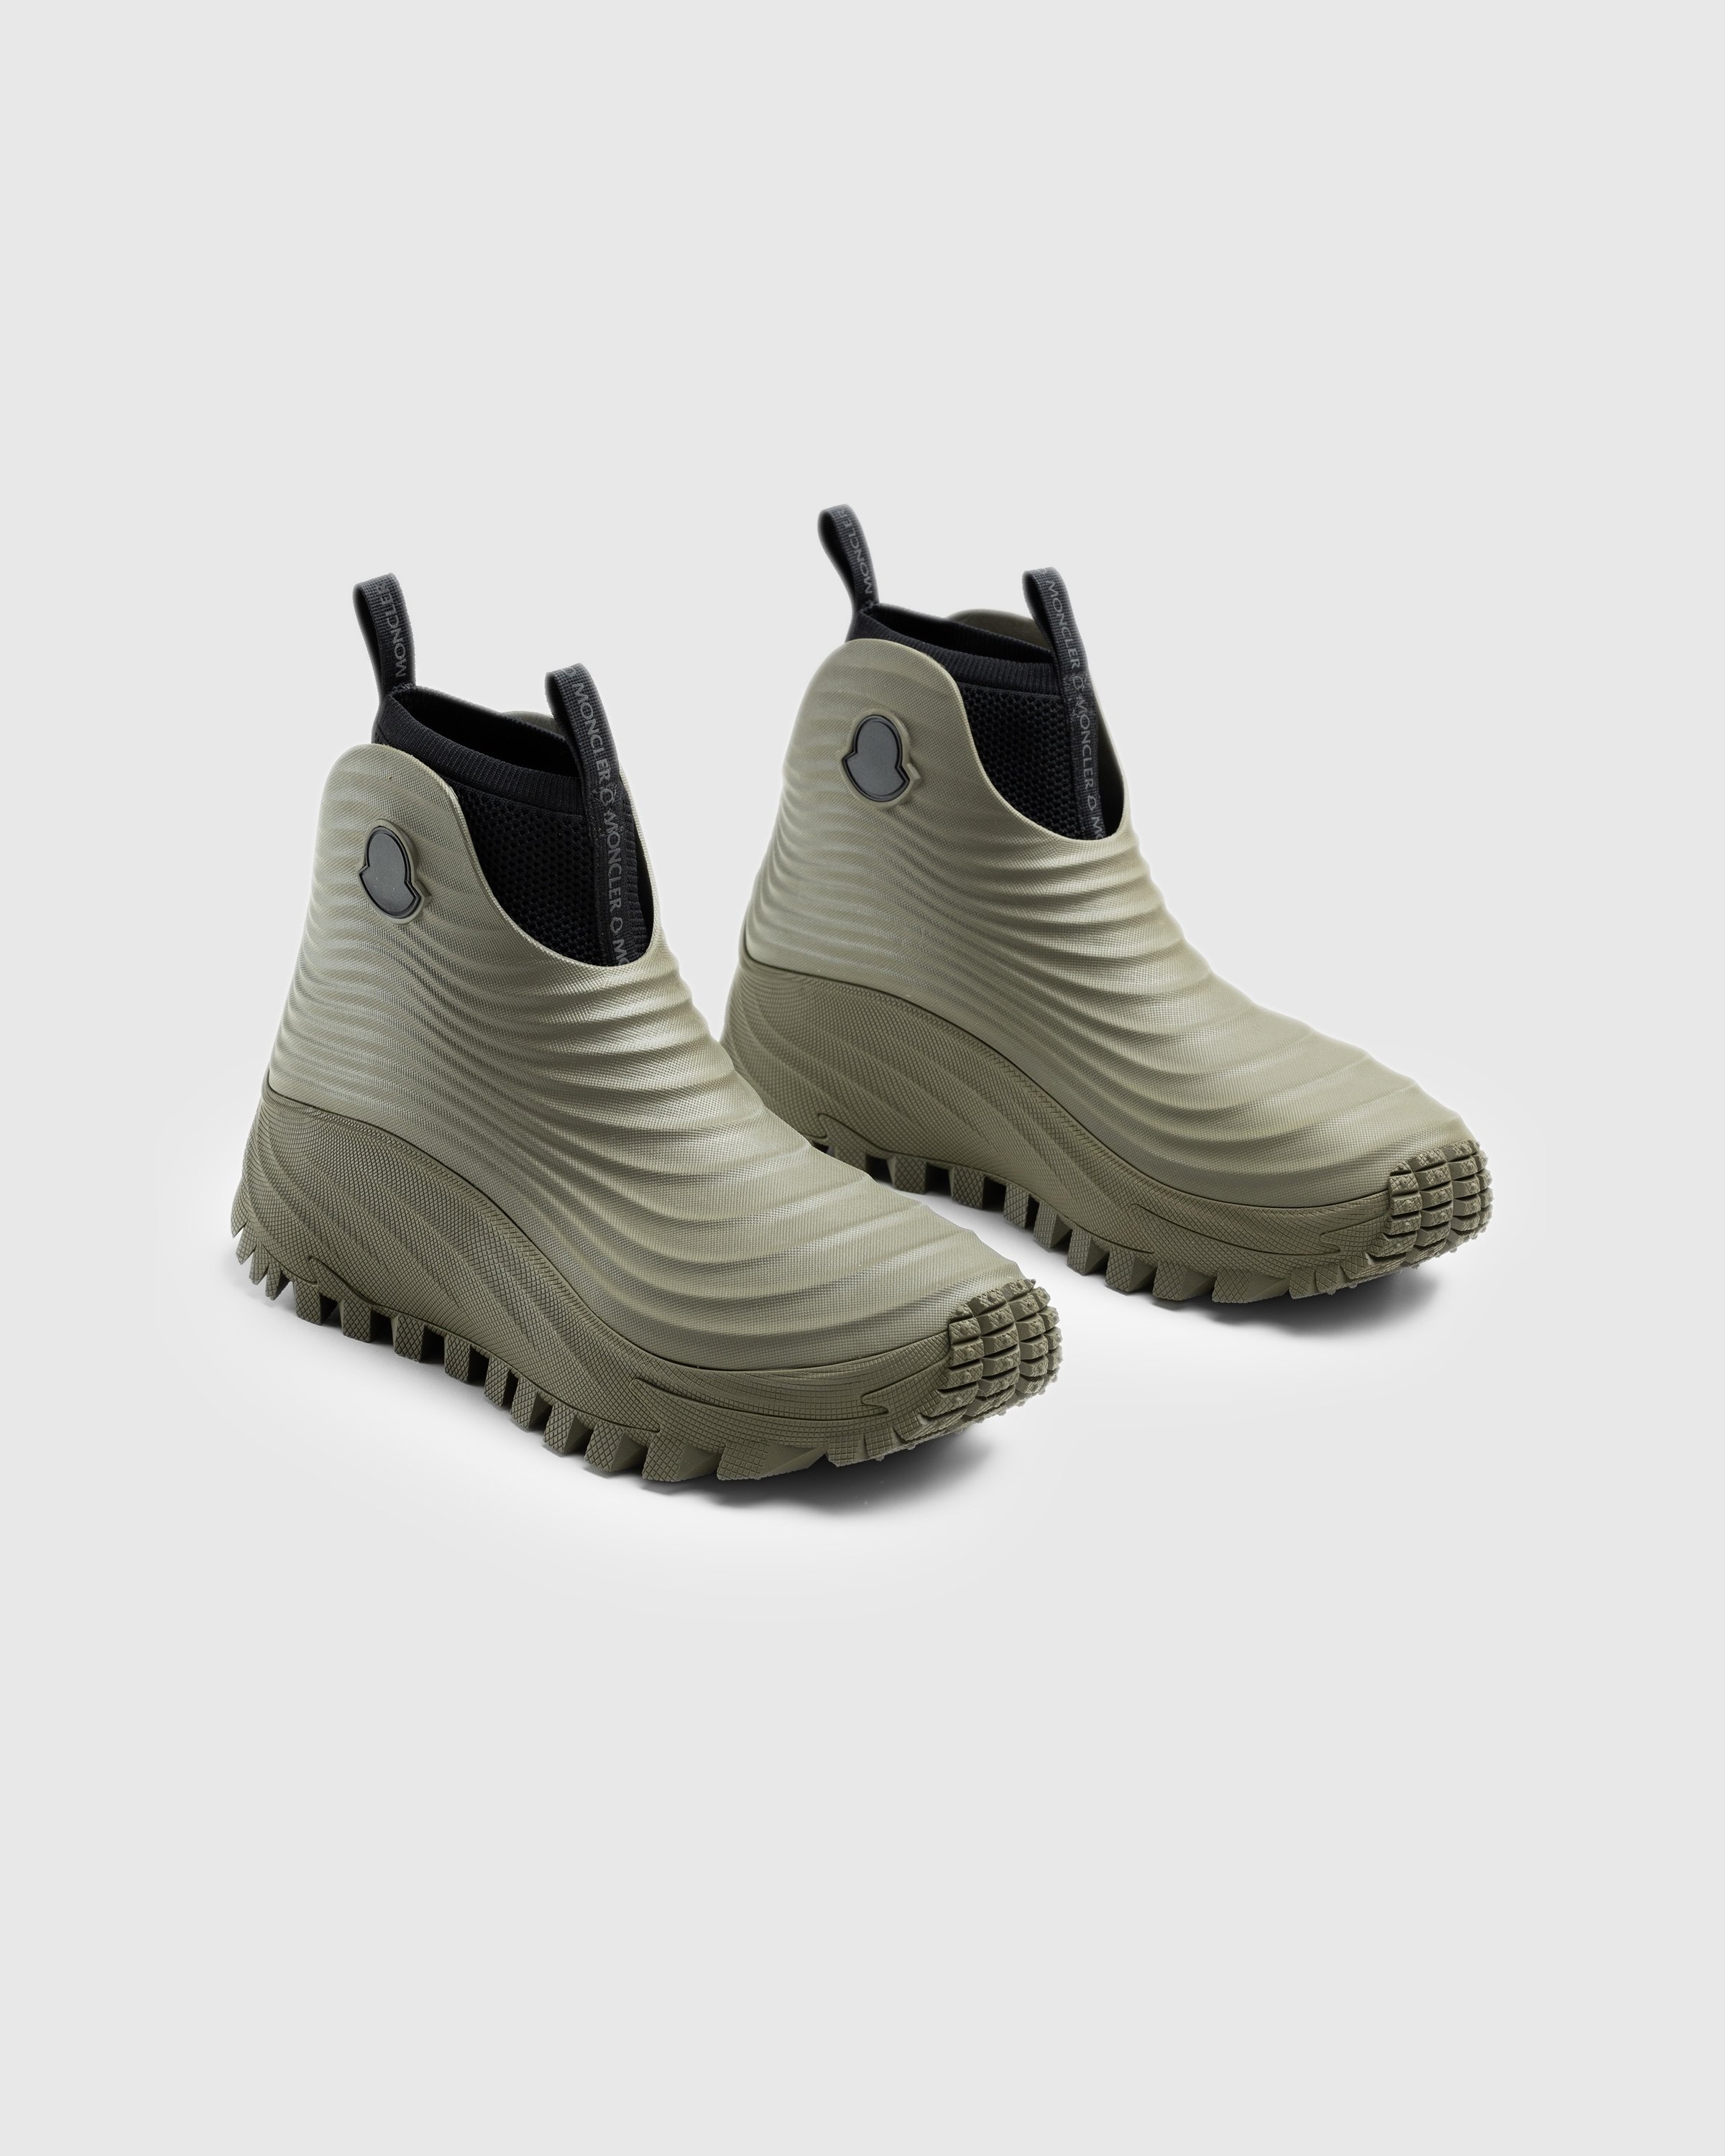 Moncler – Acqua High Rain Boots Khaki - Boots - Brown - Image 3